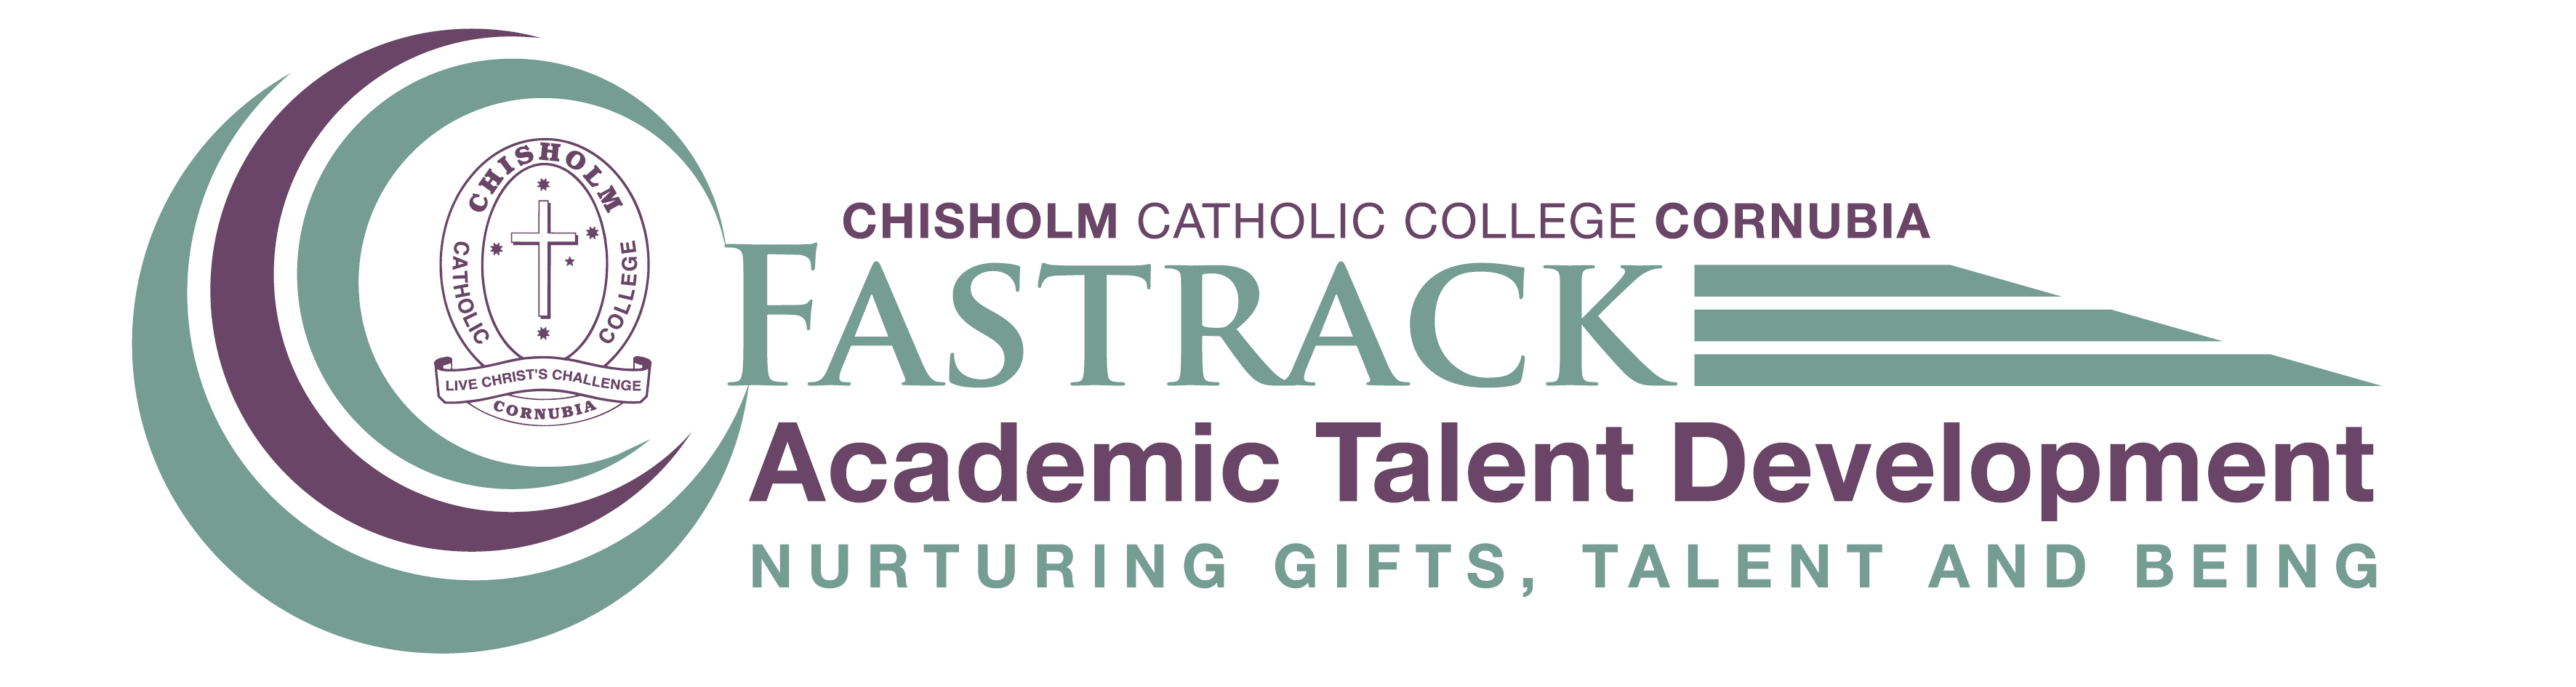 535-Fastrack Academic Talent Dev logo.jpg